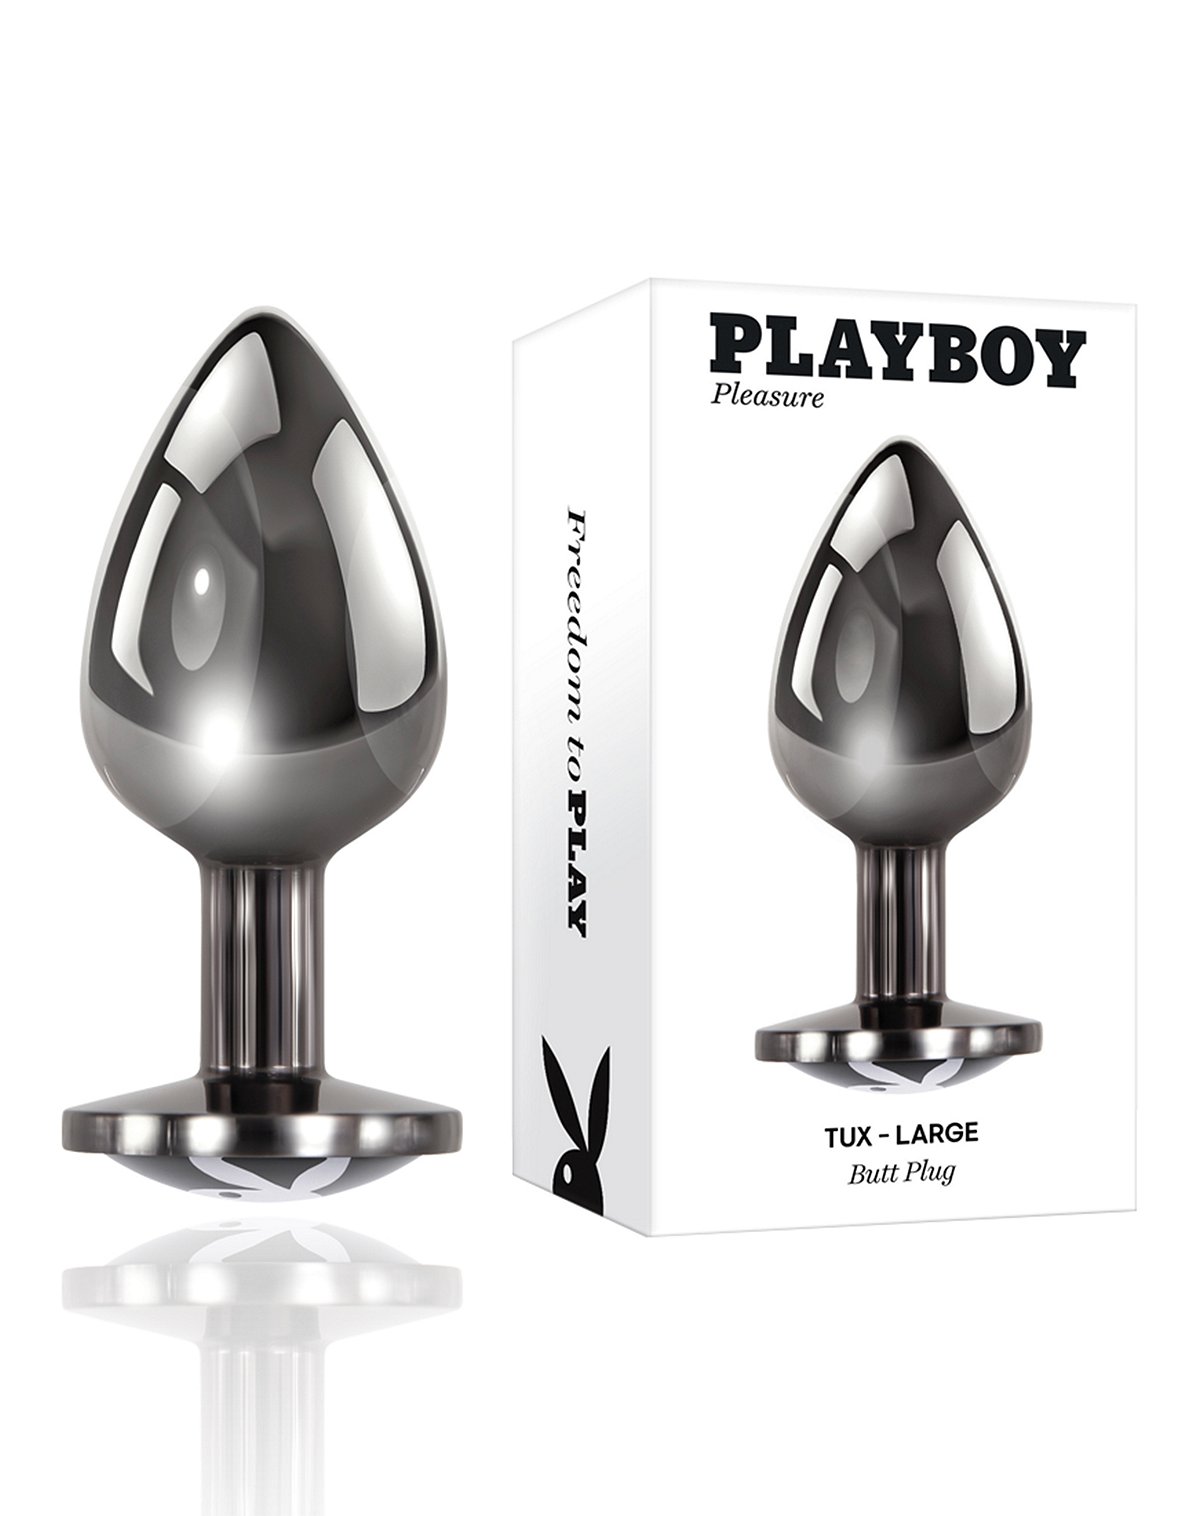 Playboy Pleasure Tux Large Butt Plug